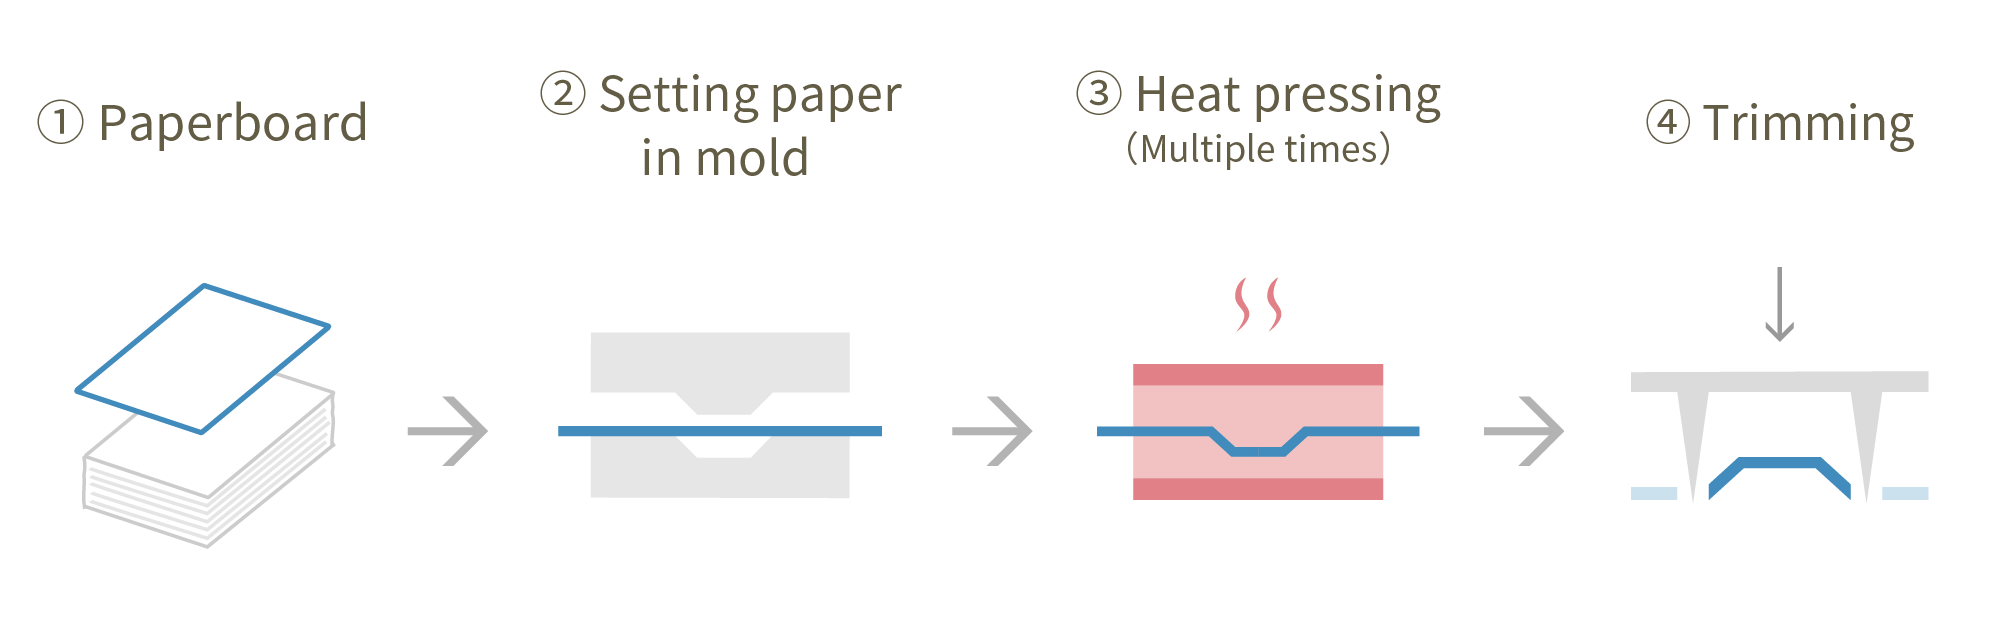 Paper-Pressing